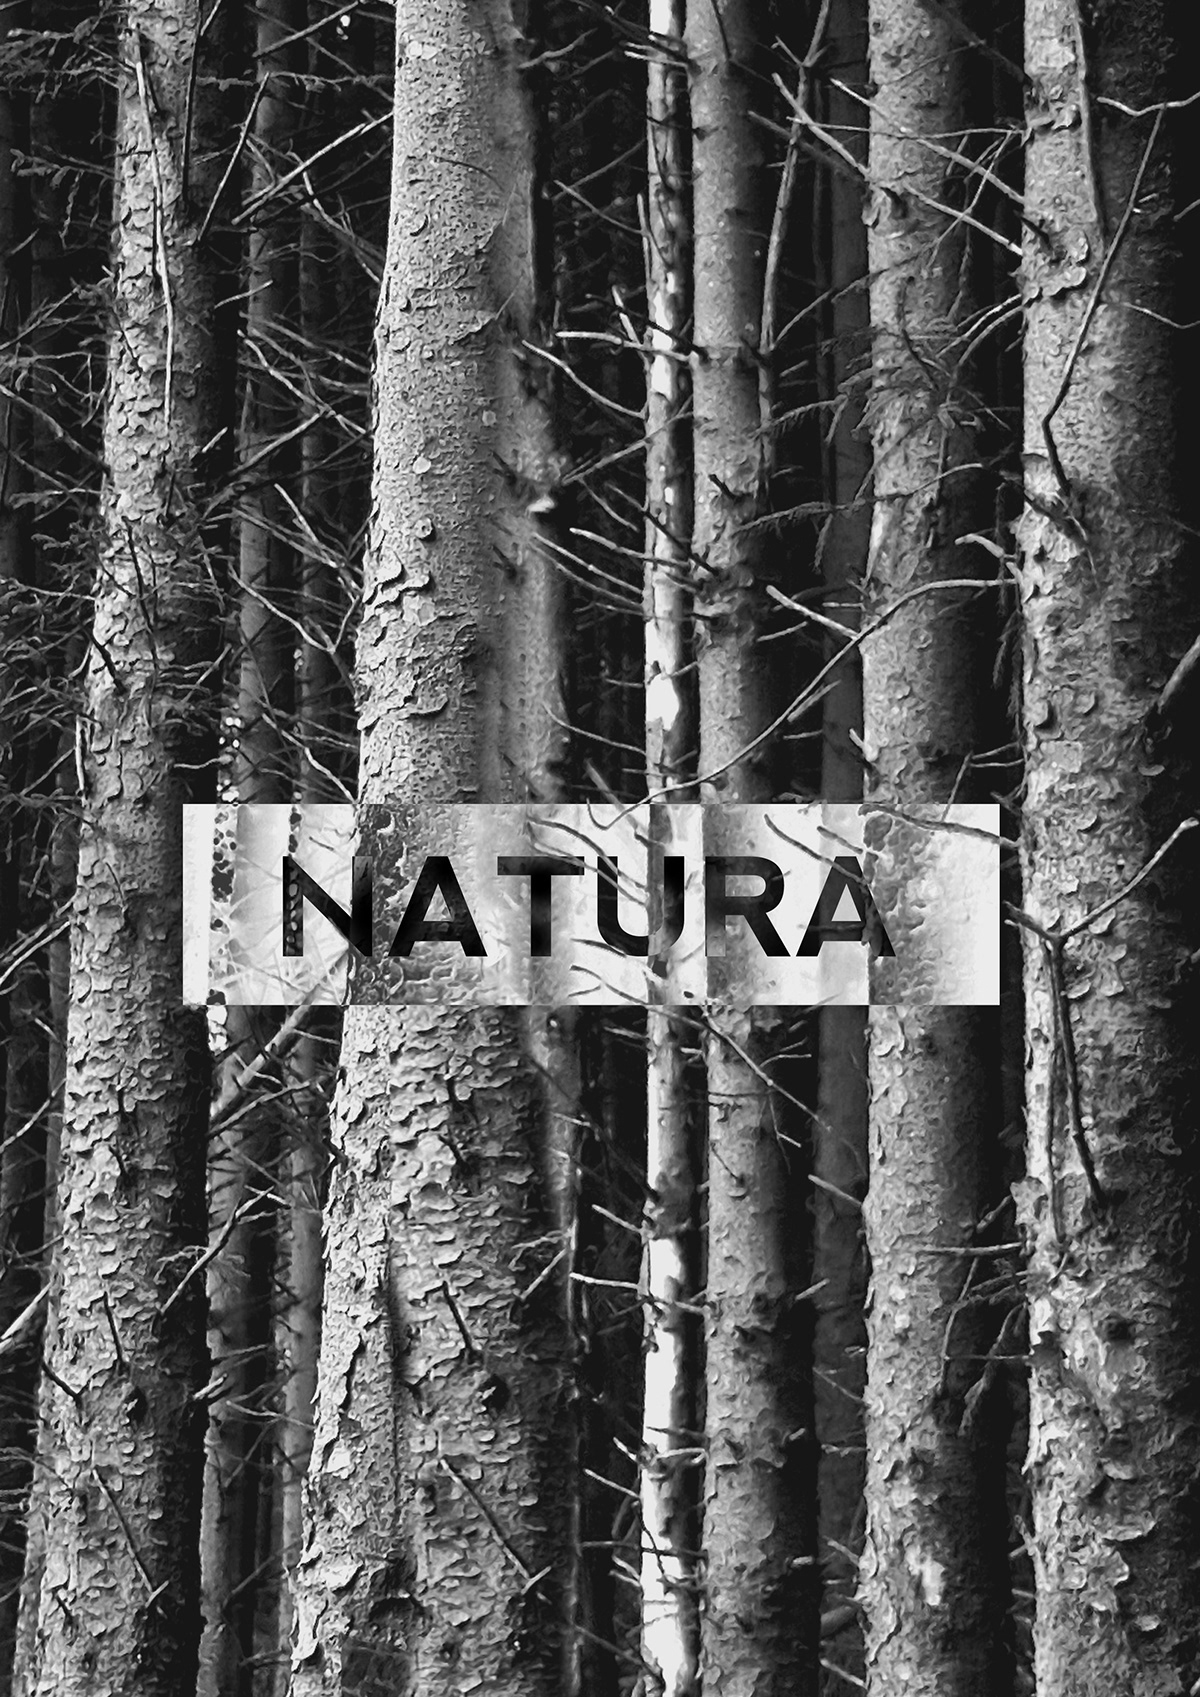 Nature culture poster